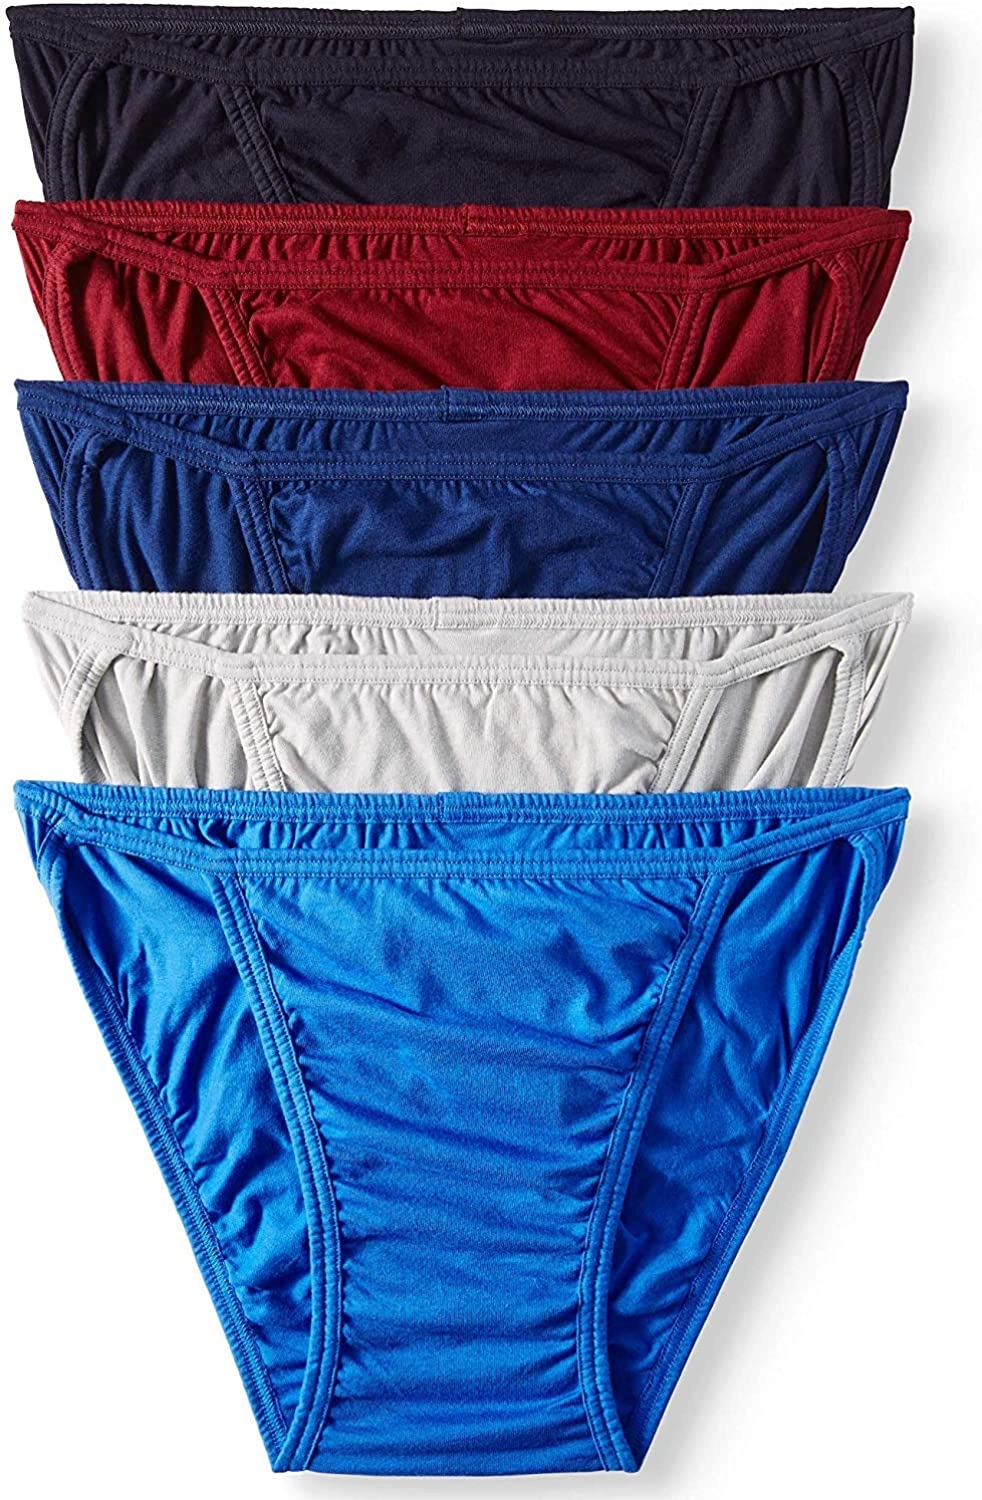 Comfort String Bikinis From Bangladesh Underwear Factory